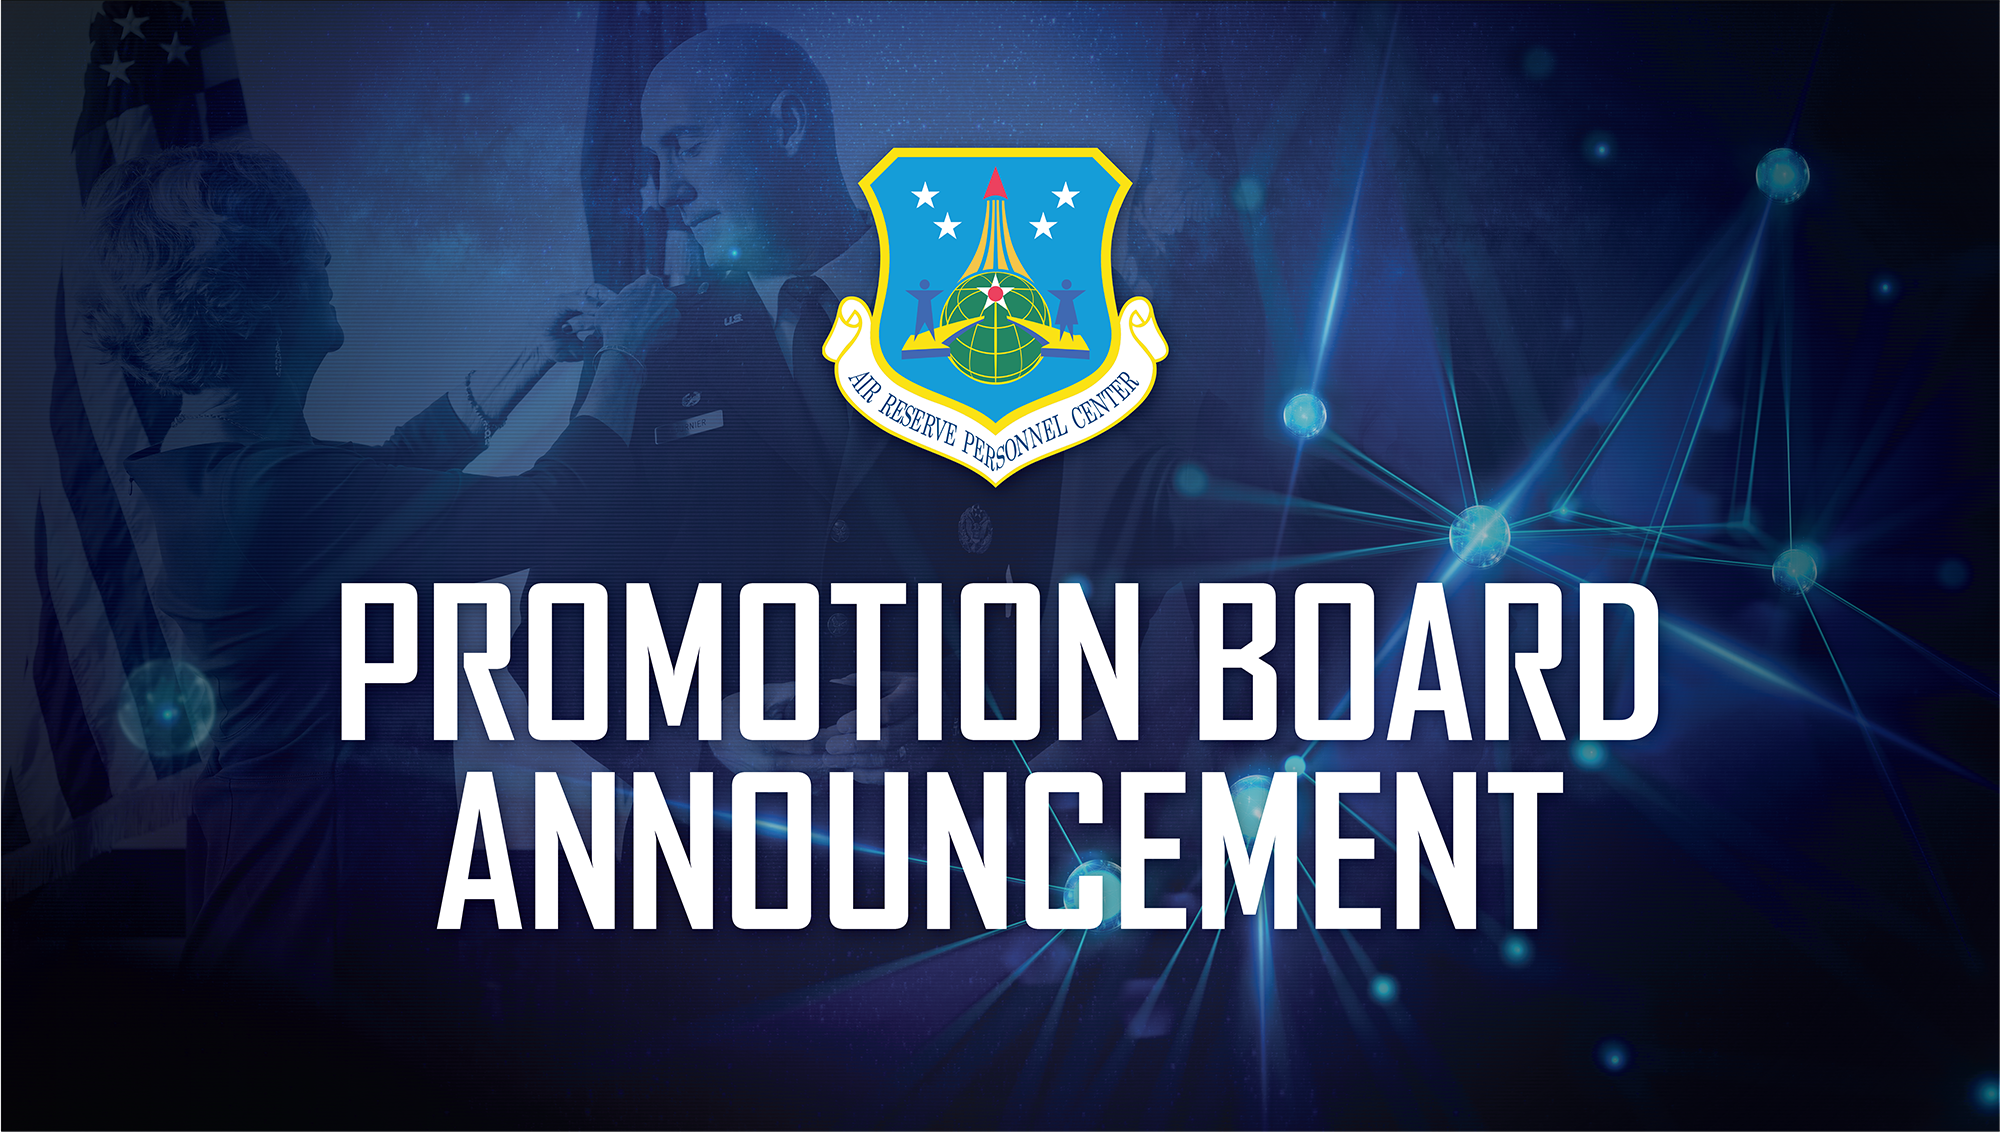 Promotion Board Announcement